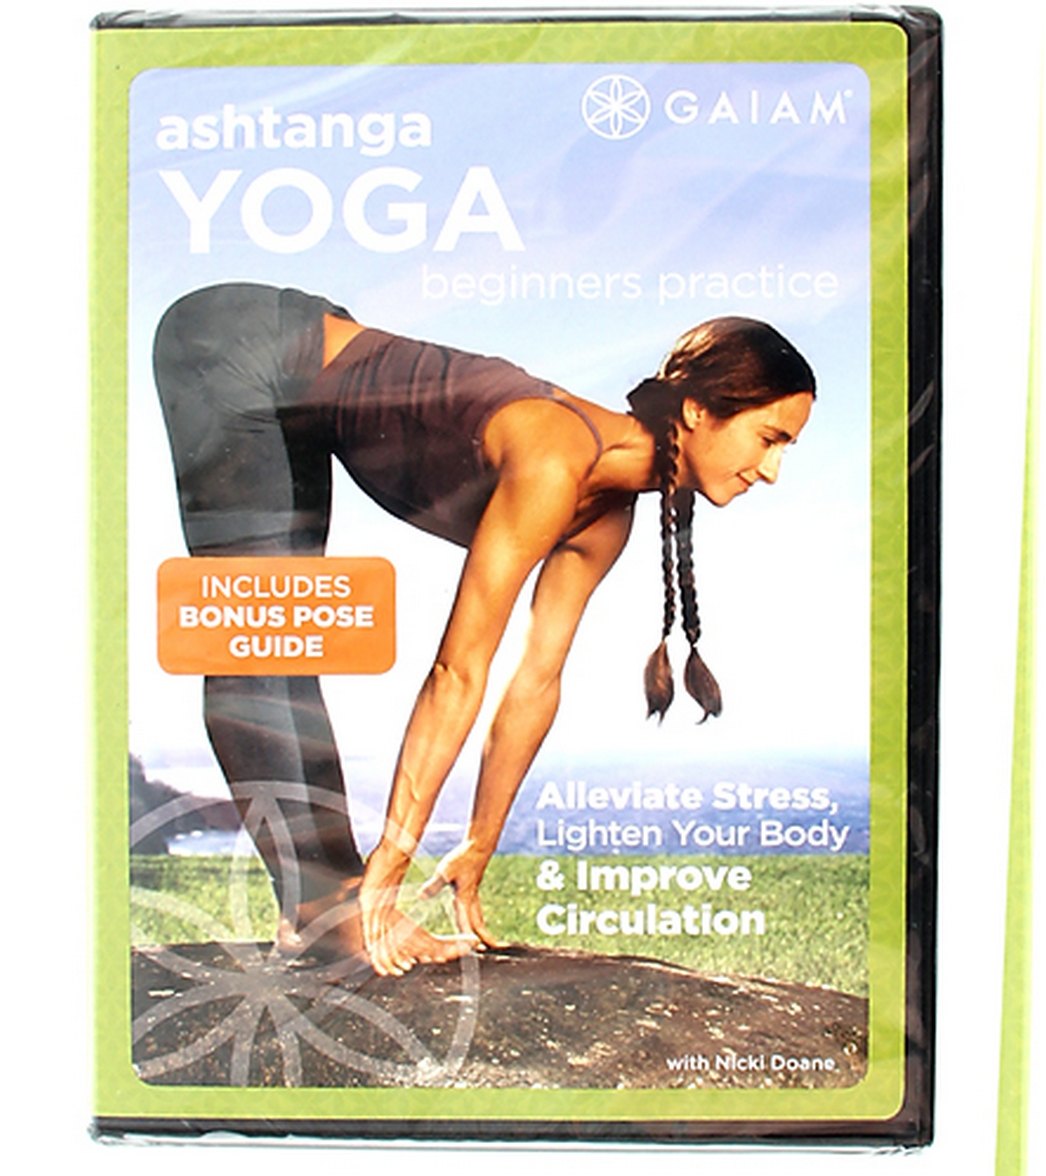 Gaiam Ashtanga Yoga For Beginners DVD at